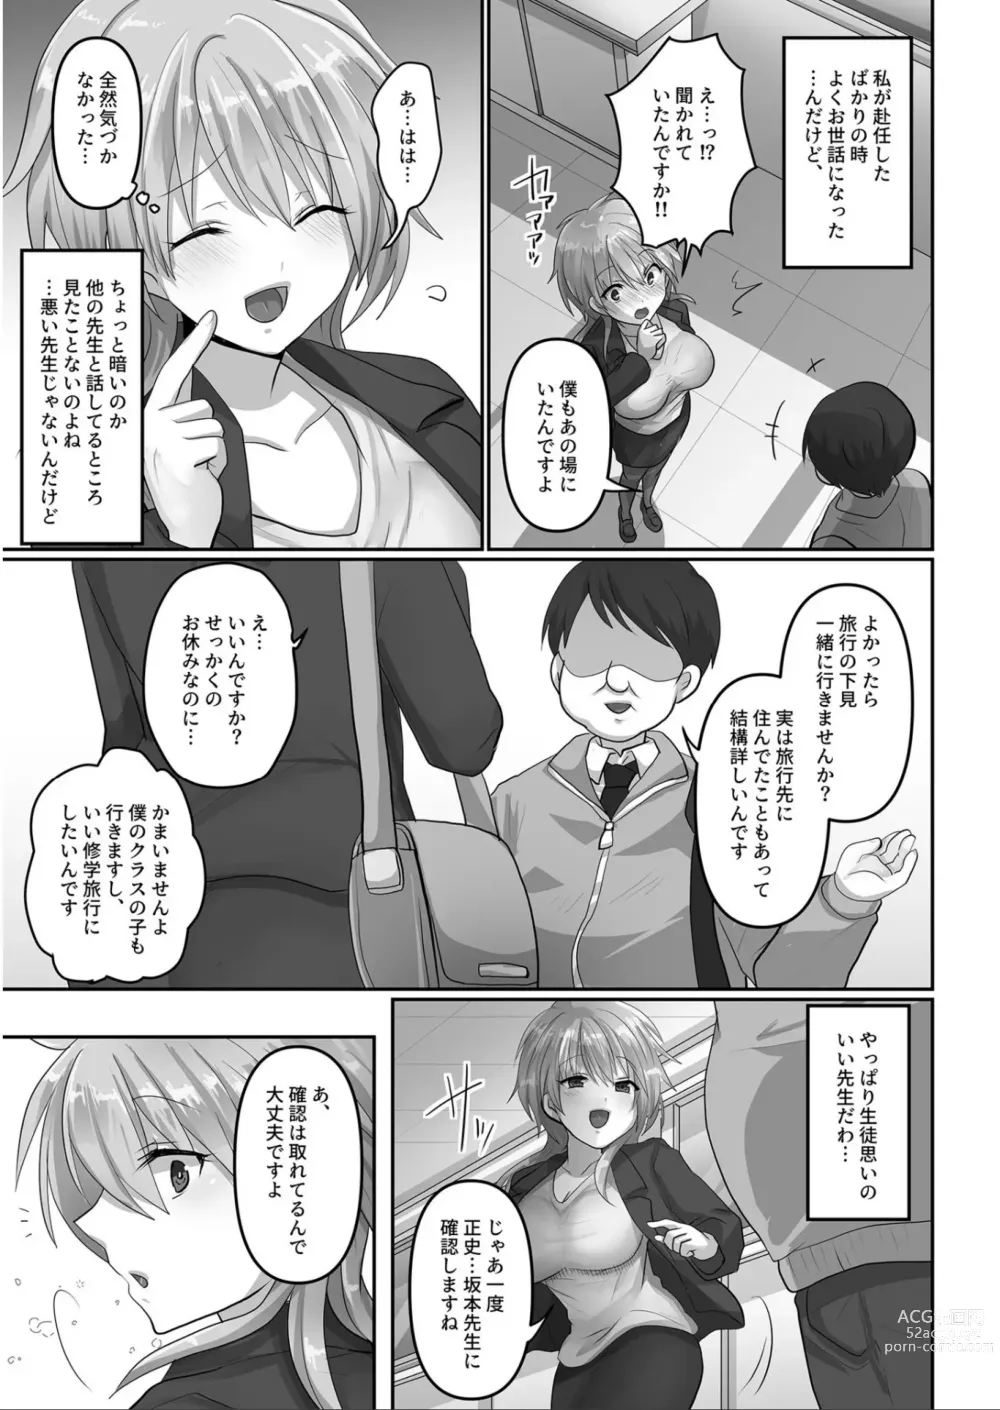 Page 6 of manga Kegasareta Watashi...